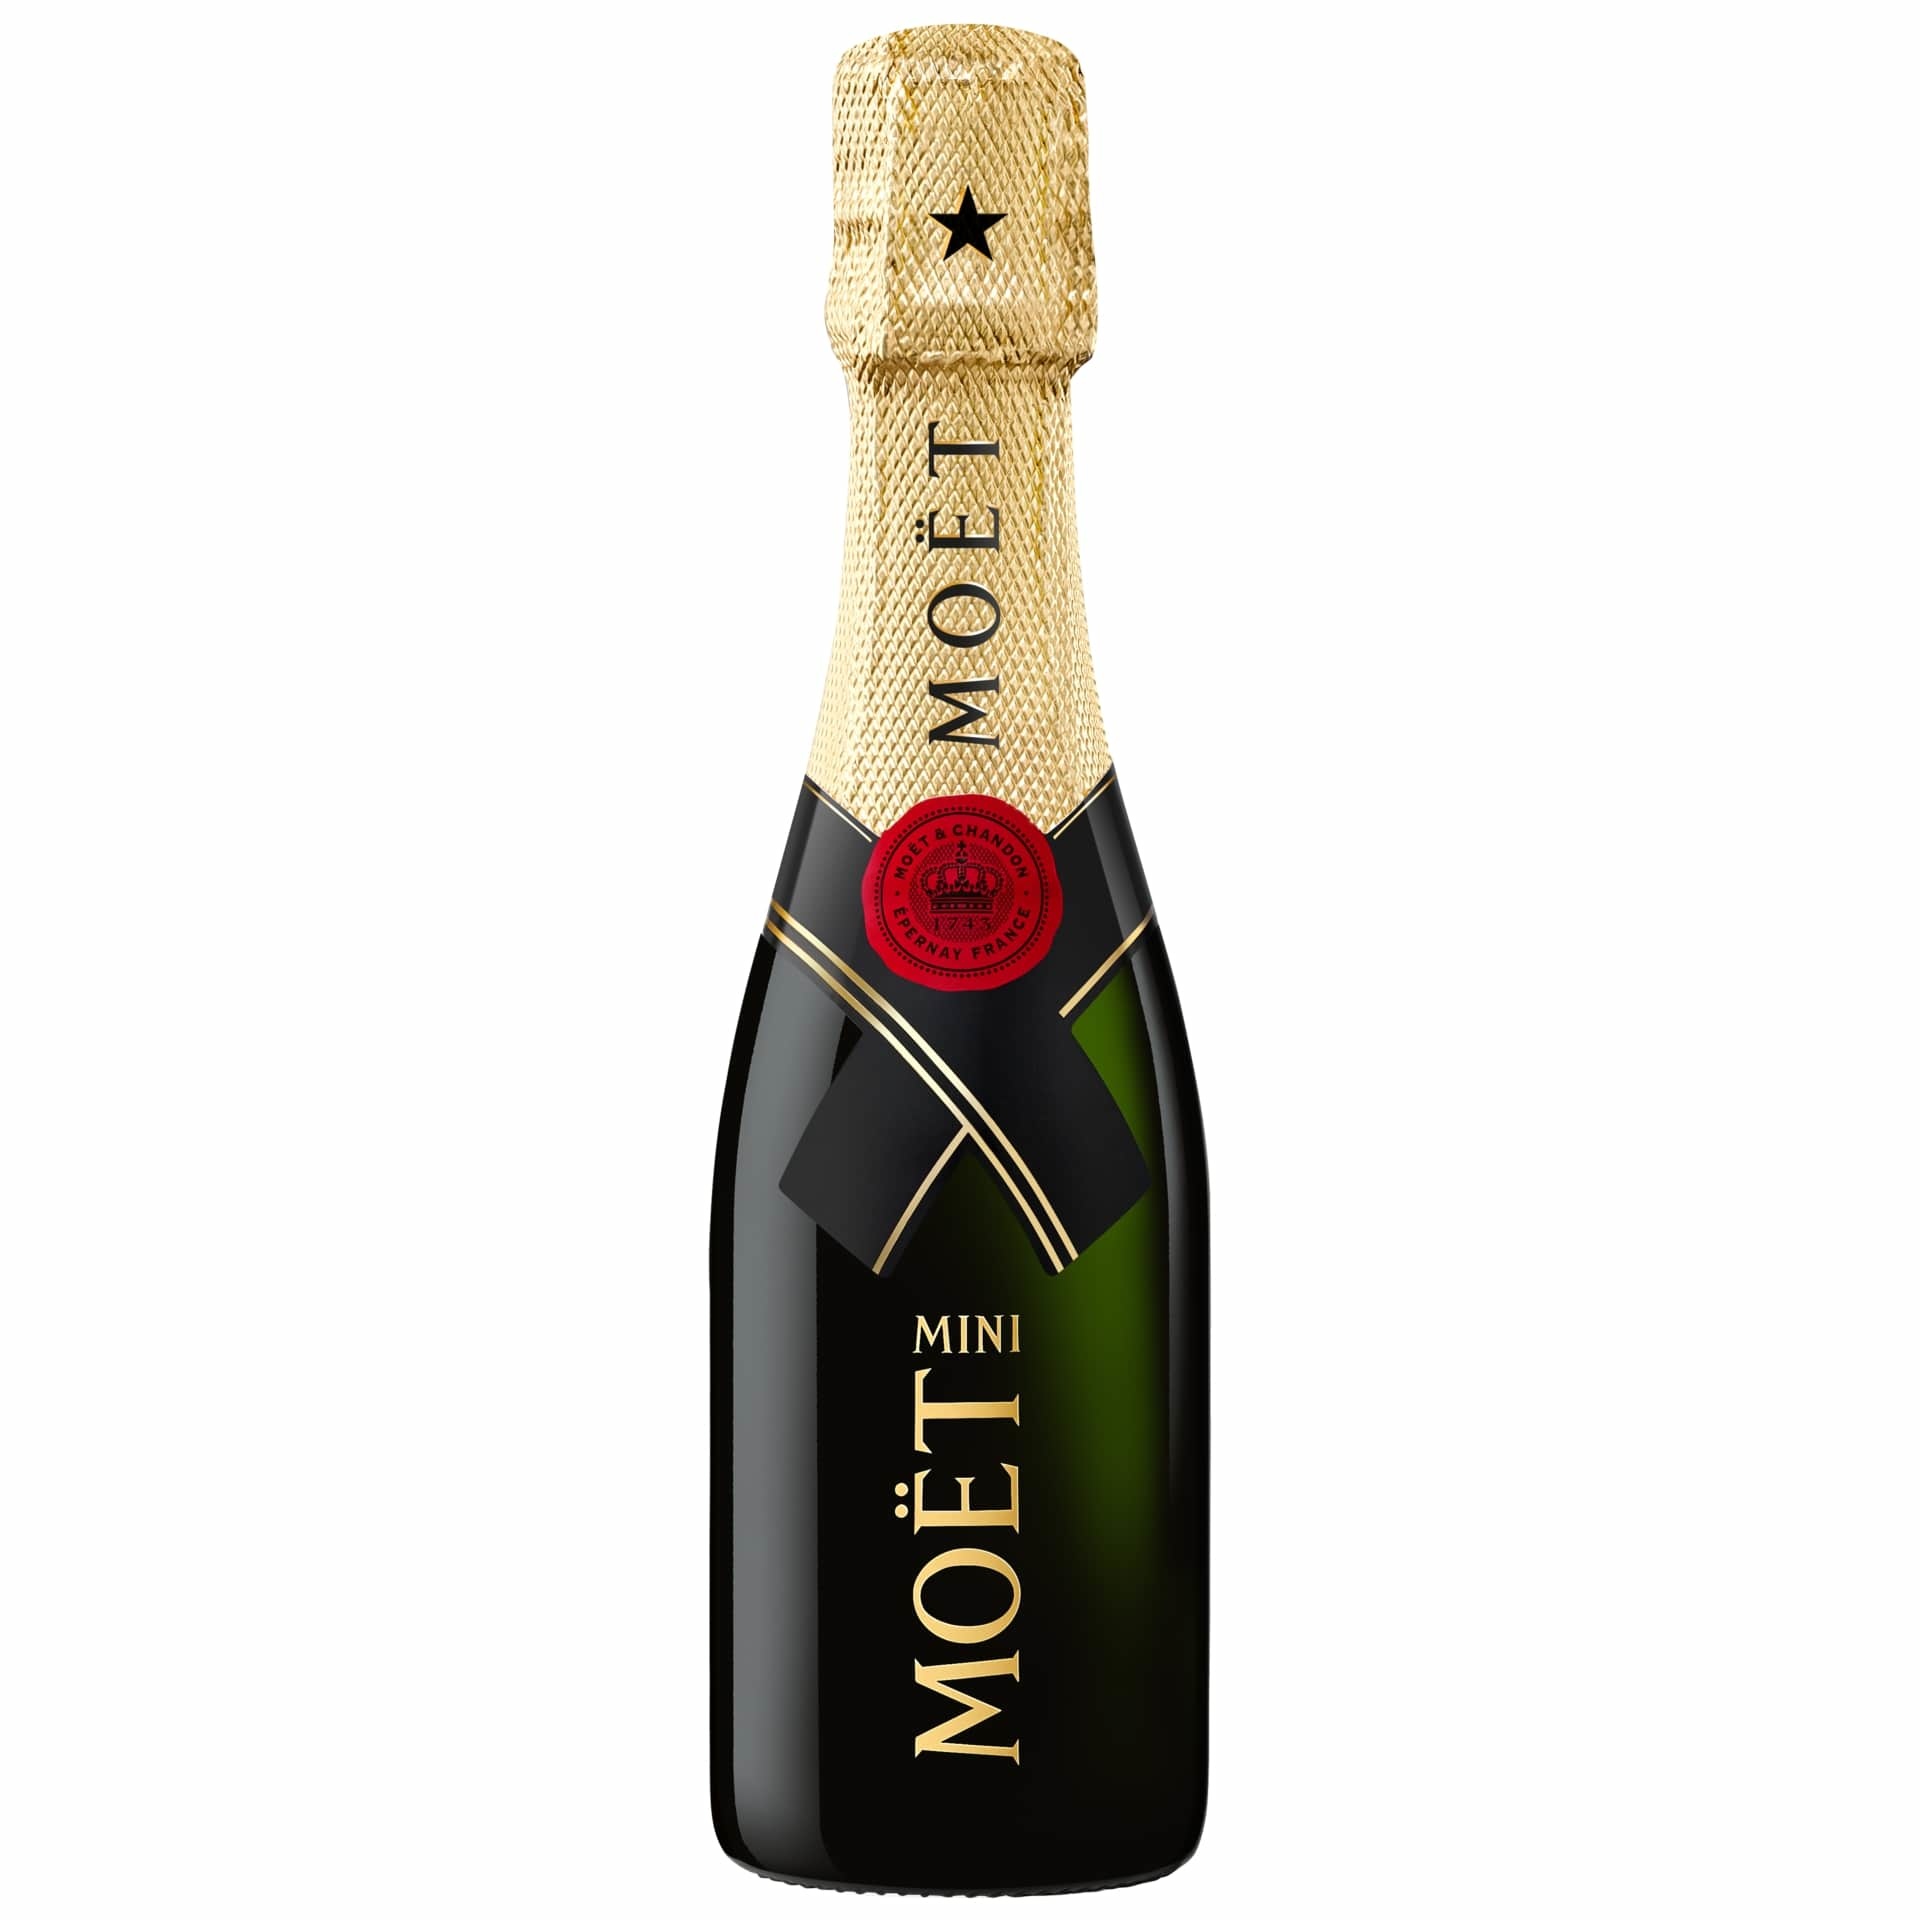 Versterken Stout Absoluut Moët & Chandon Moët Imperial Brut 20CL | Club Champagne - Club Champagne